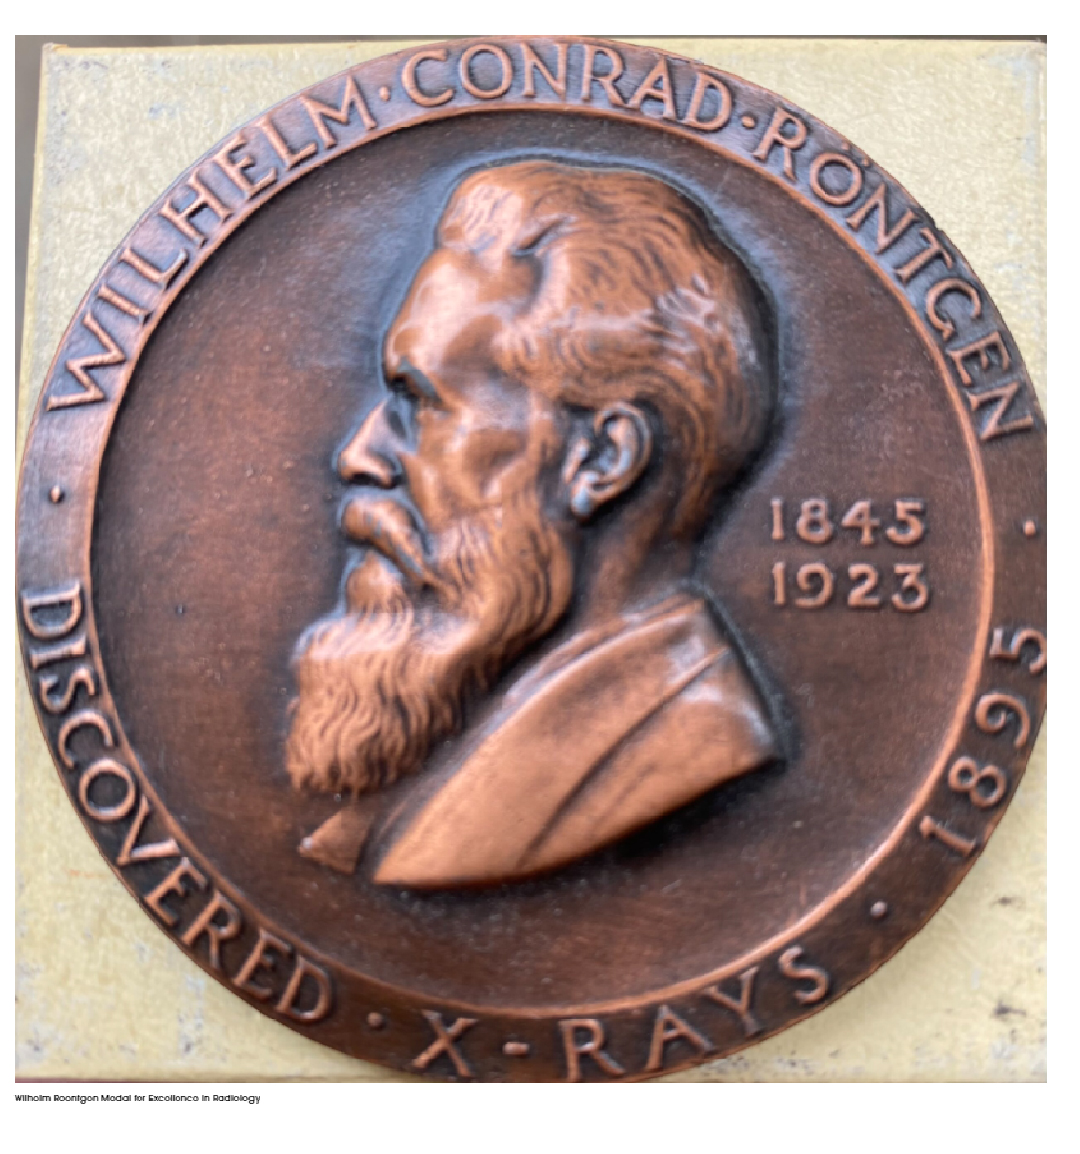 Wilhelm Roentgen Medal for Excellence in Radiology